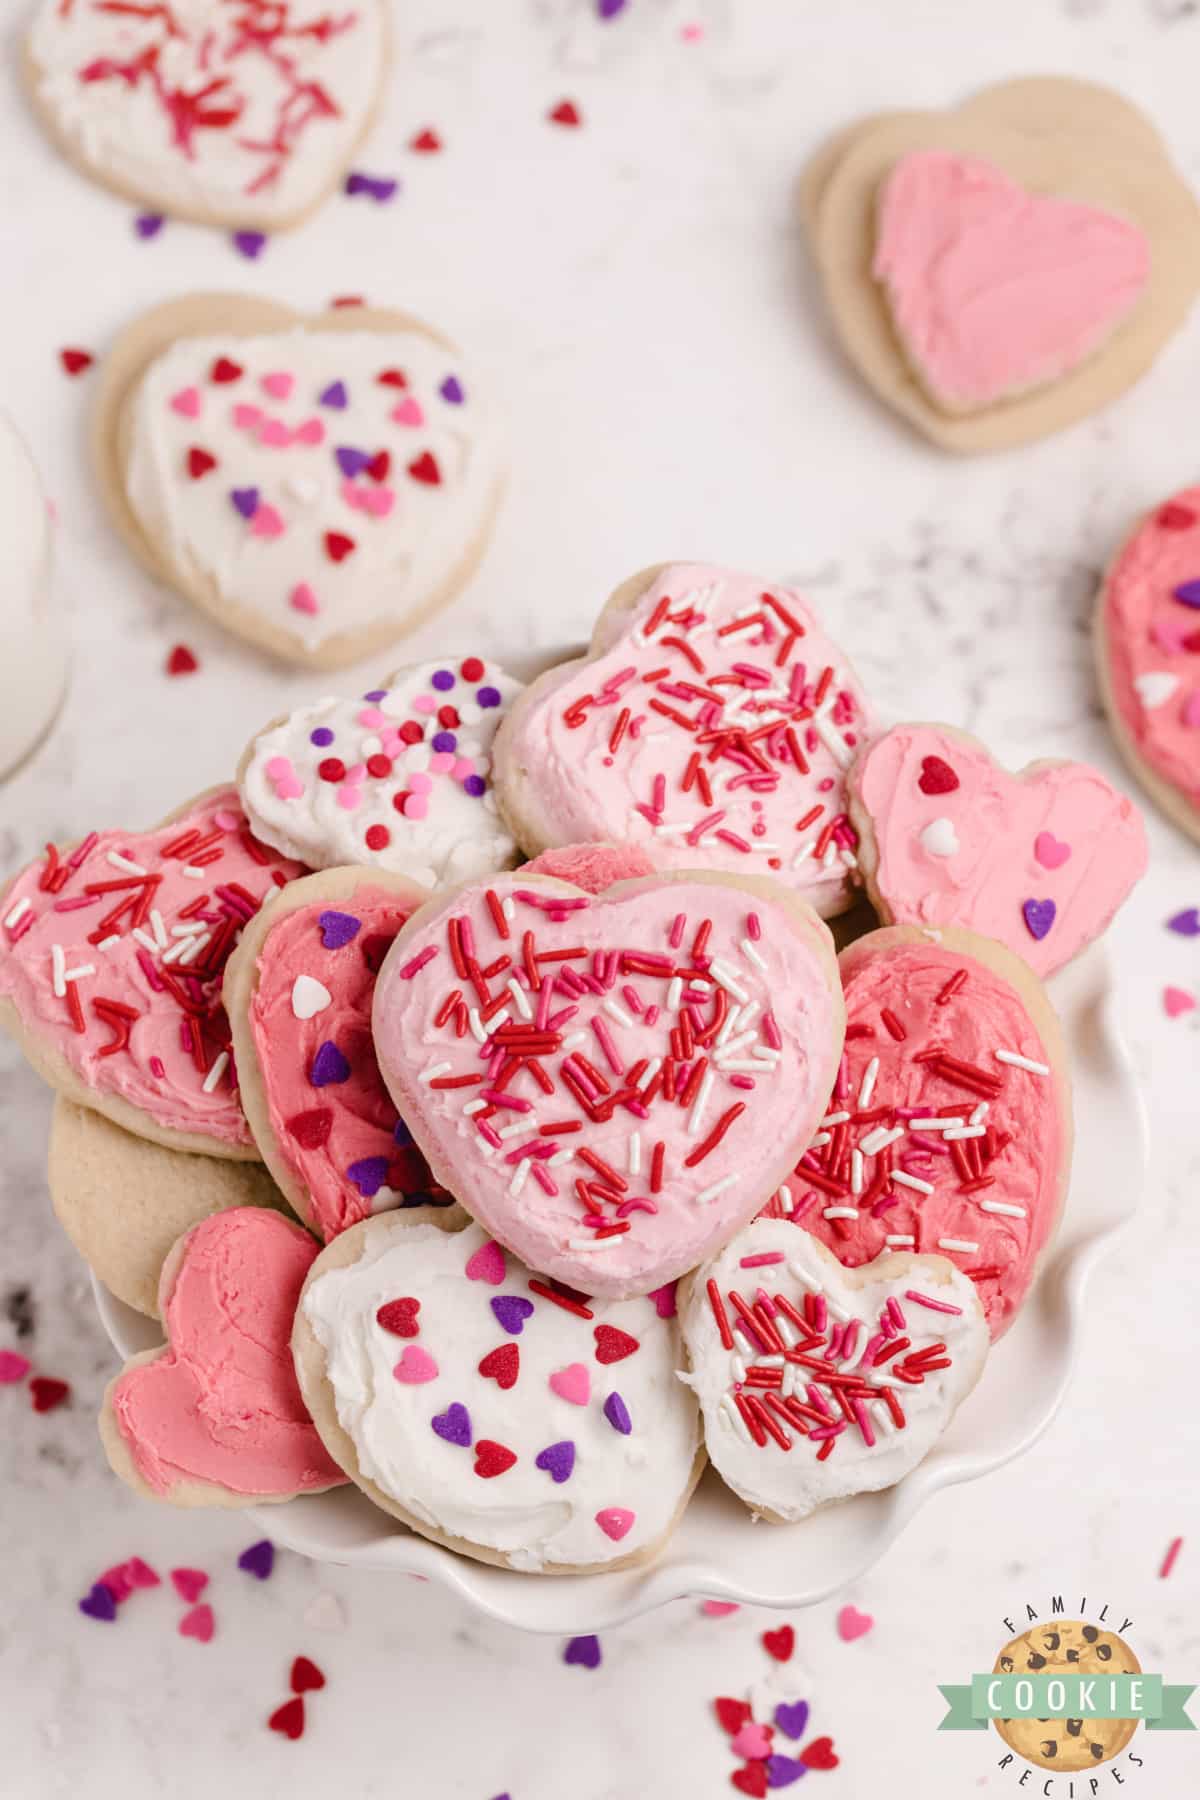 Plate of heart-shaped sugar cookies. 